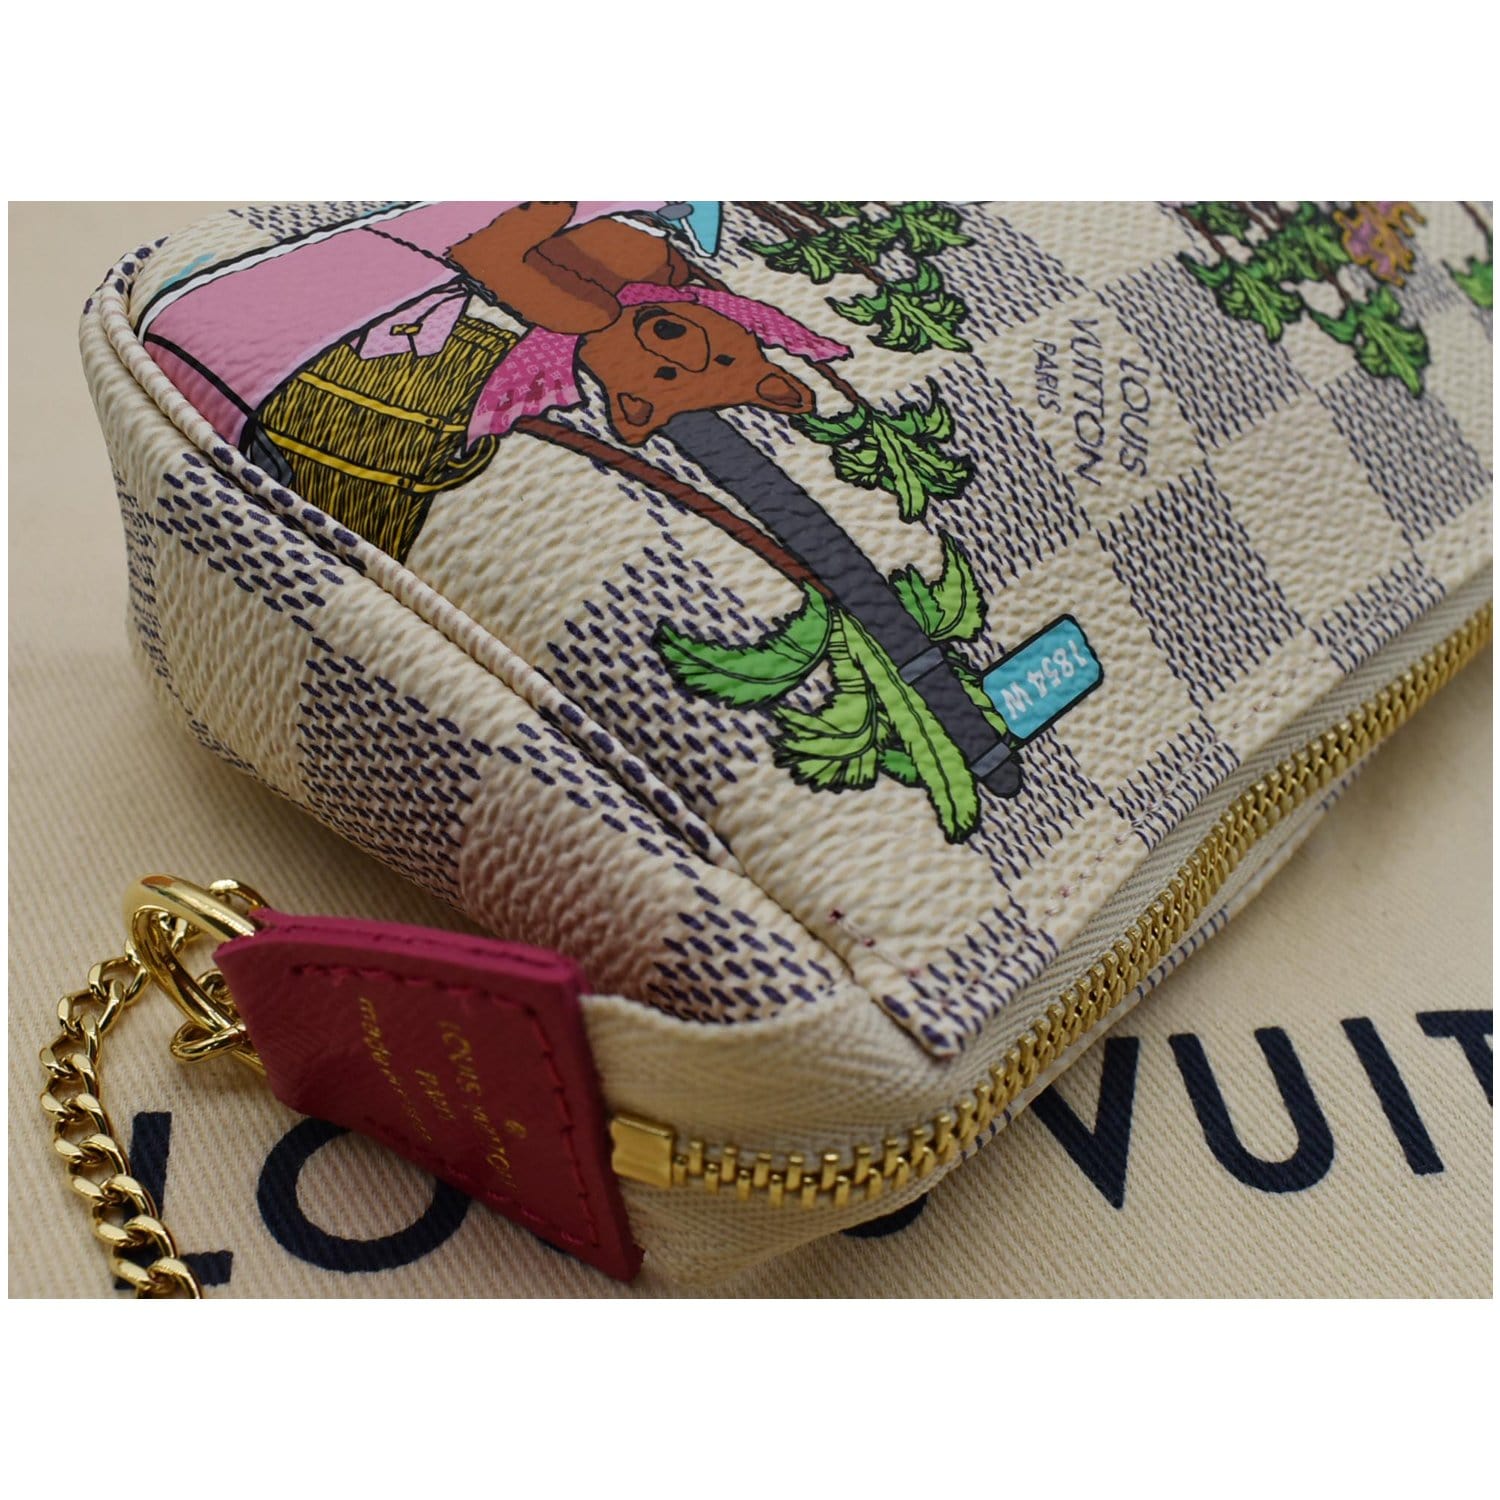 Louis Vuitton Damier Azur Christmas Round Coin Purse Bag Charm - Ann's  Fabulous Closeouts